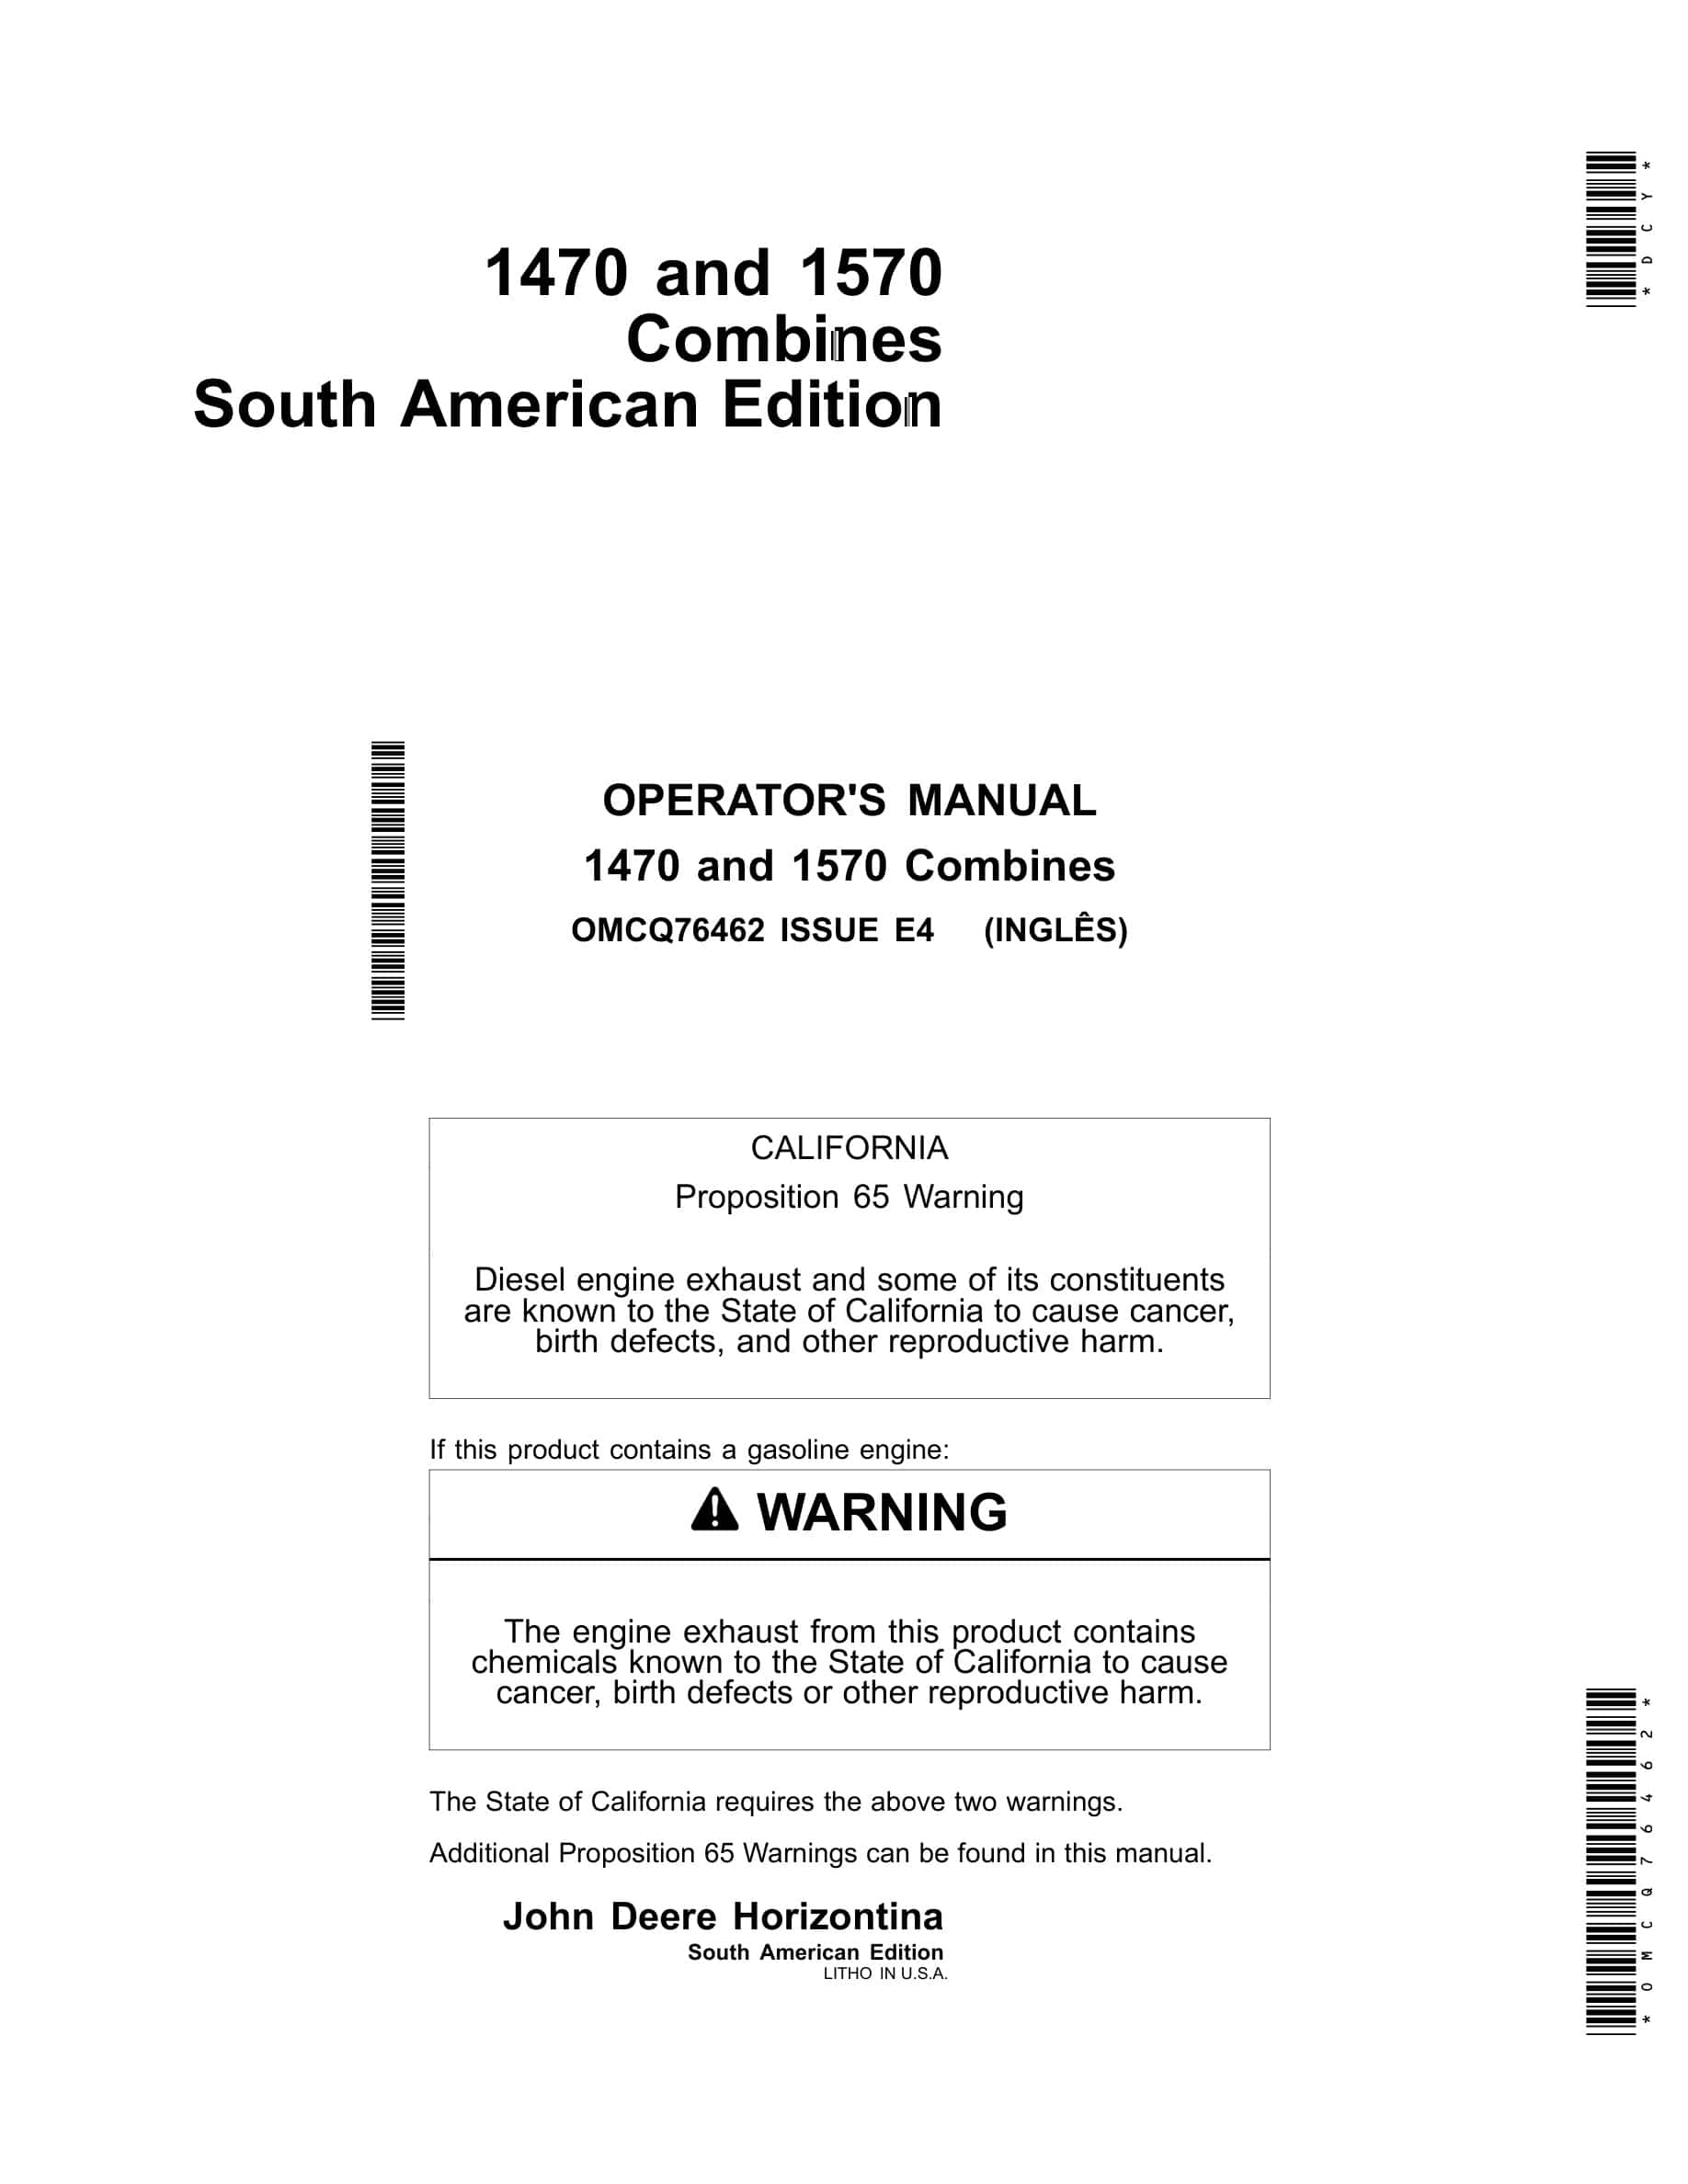 John Deere 1470 and 1570 Combine Operator Manual OMCQ76462-1